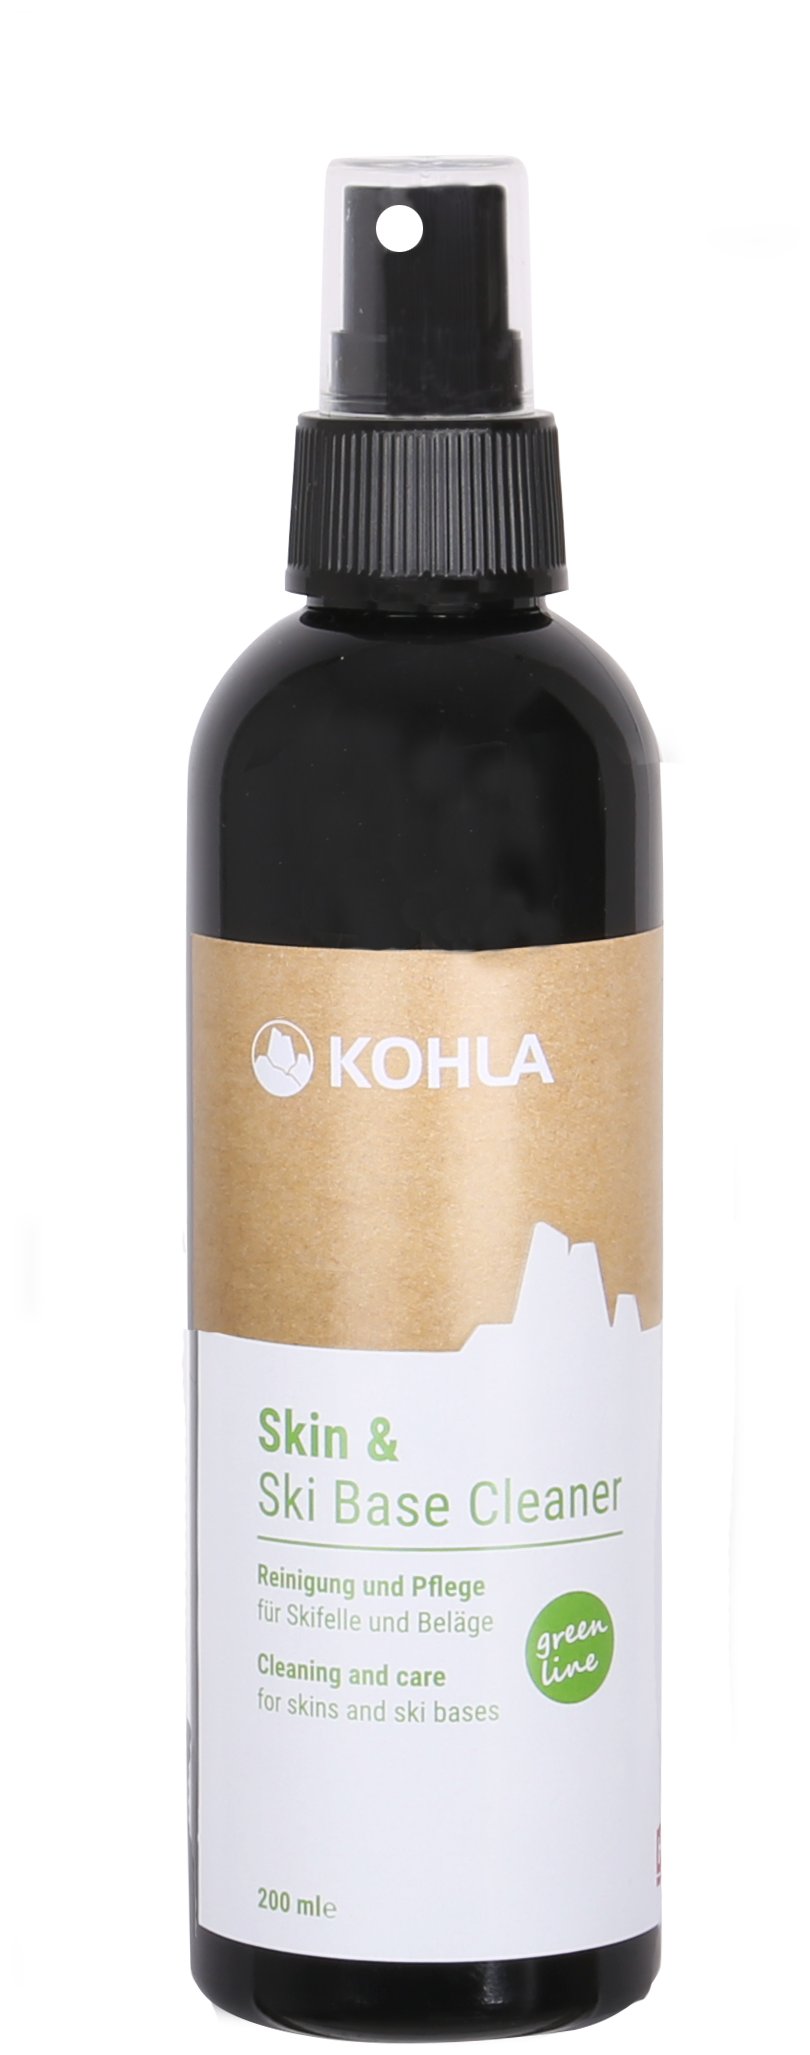 Kohla Skin and Base Cleaner - Green Line